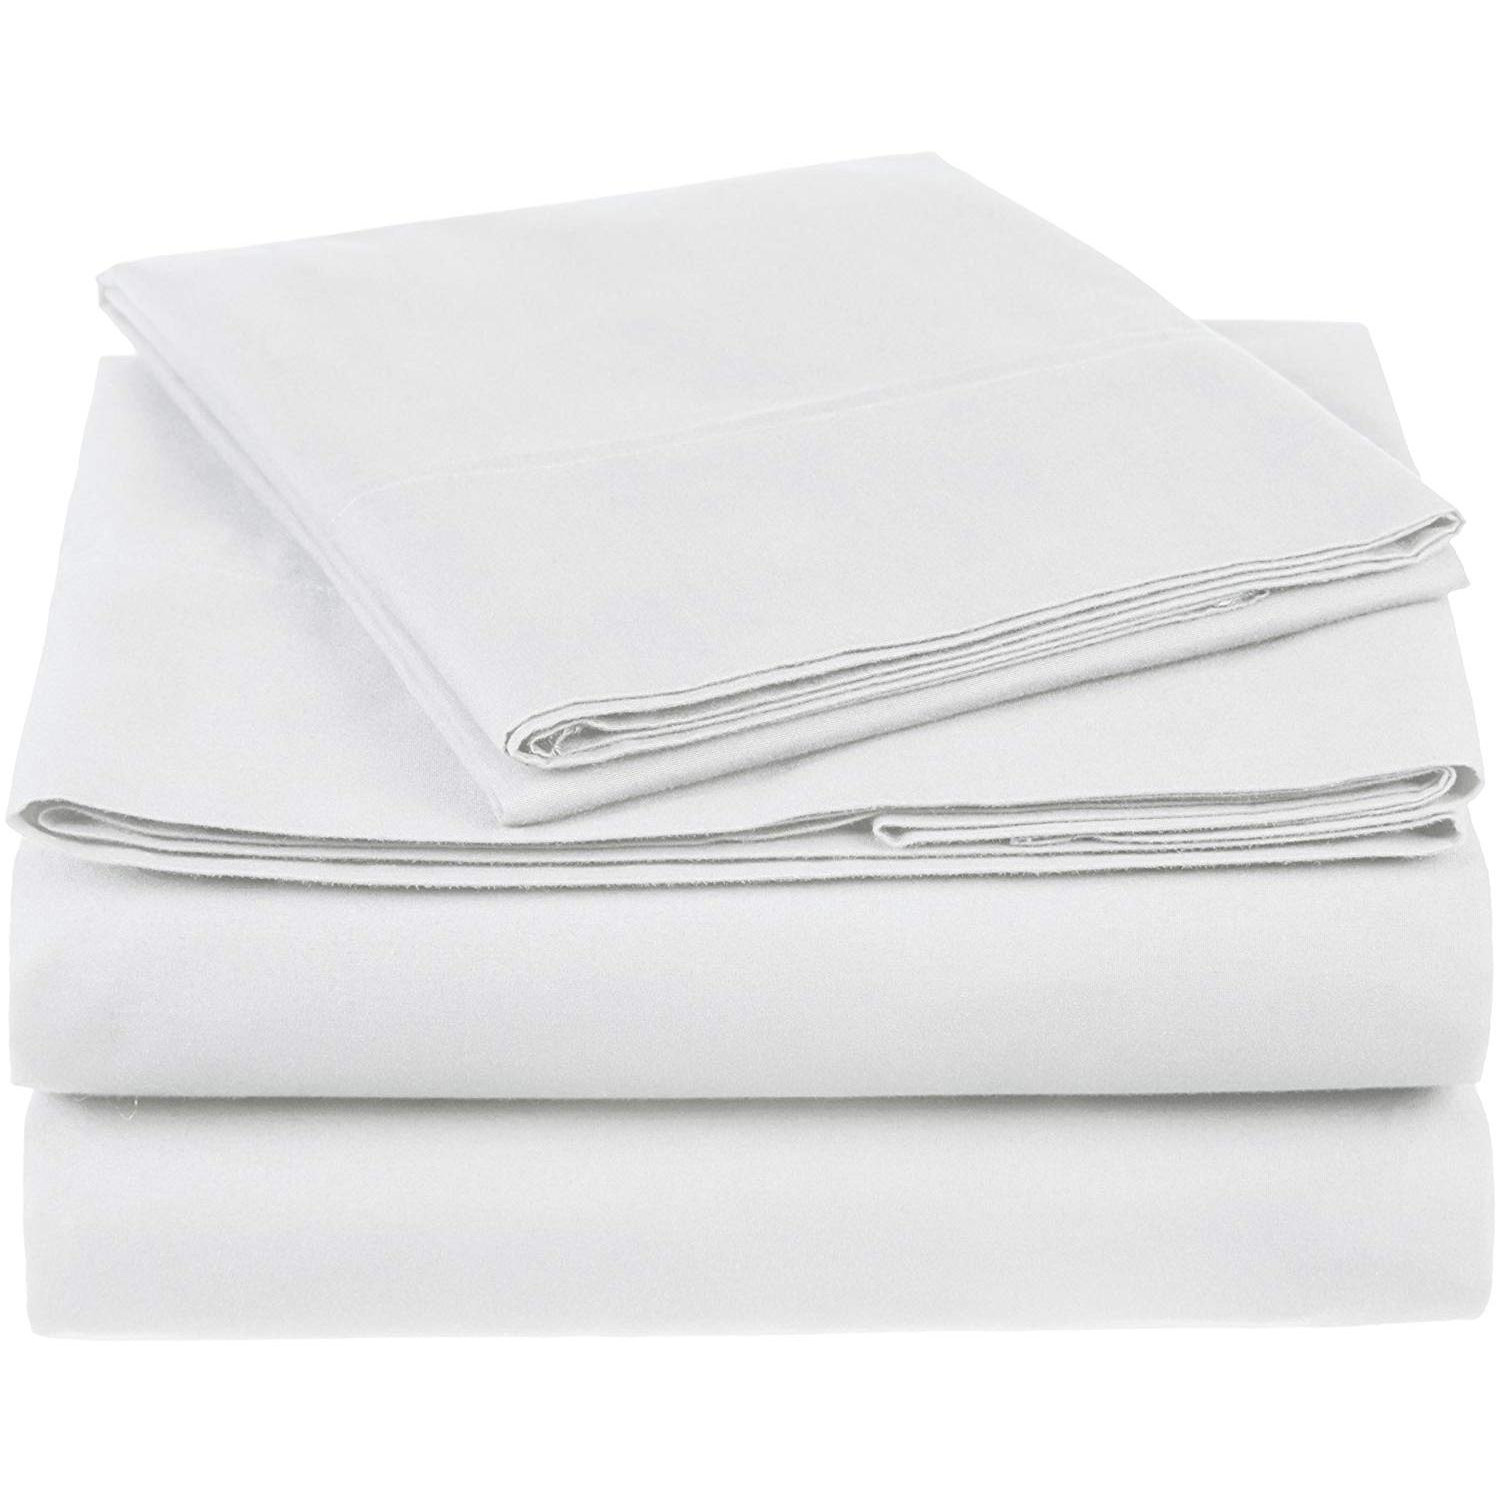 100% Cotton Sheet Set - 500 Thread Count (Piece:6 PIECE, Size:QUEEN, Color:WHITE)